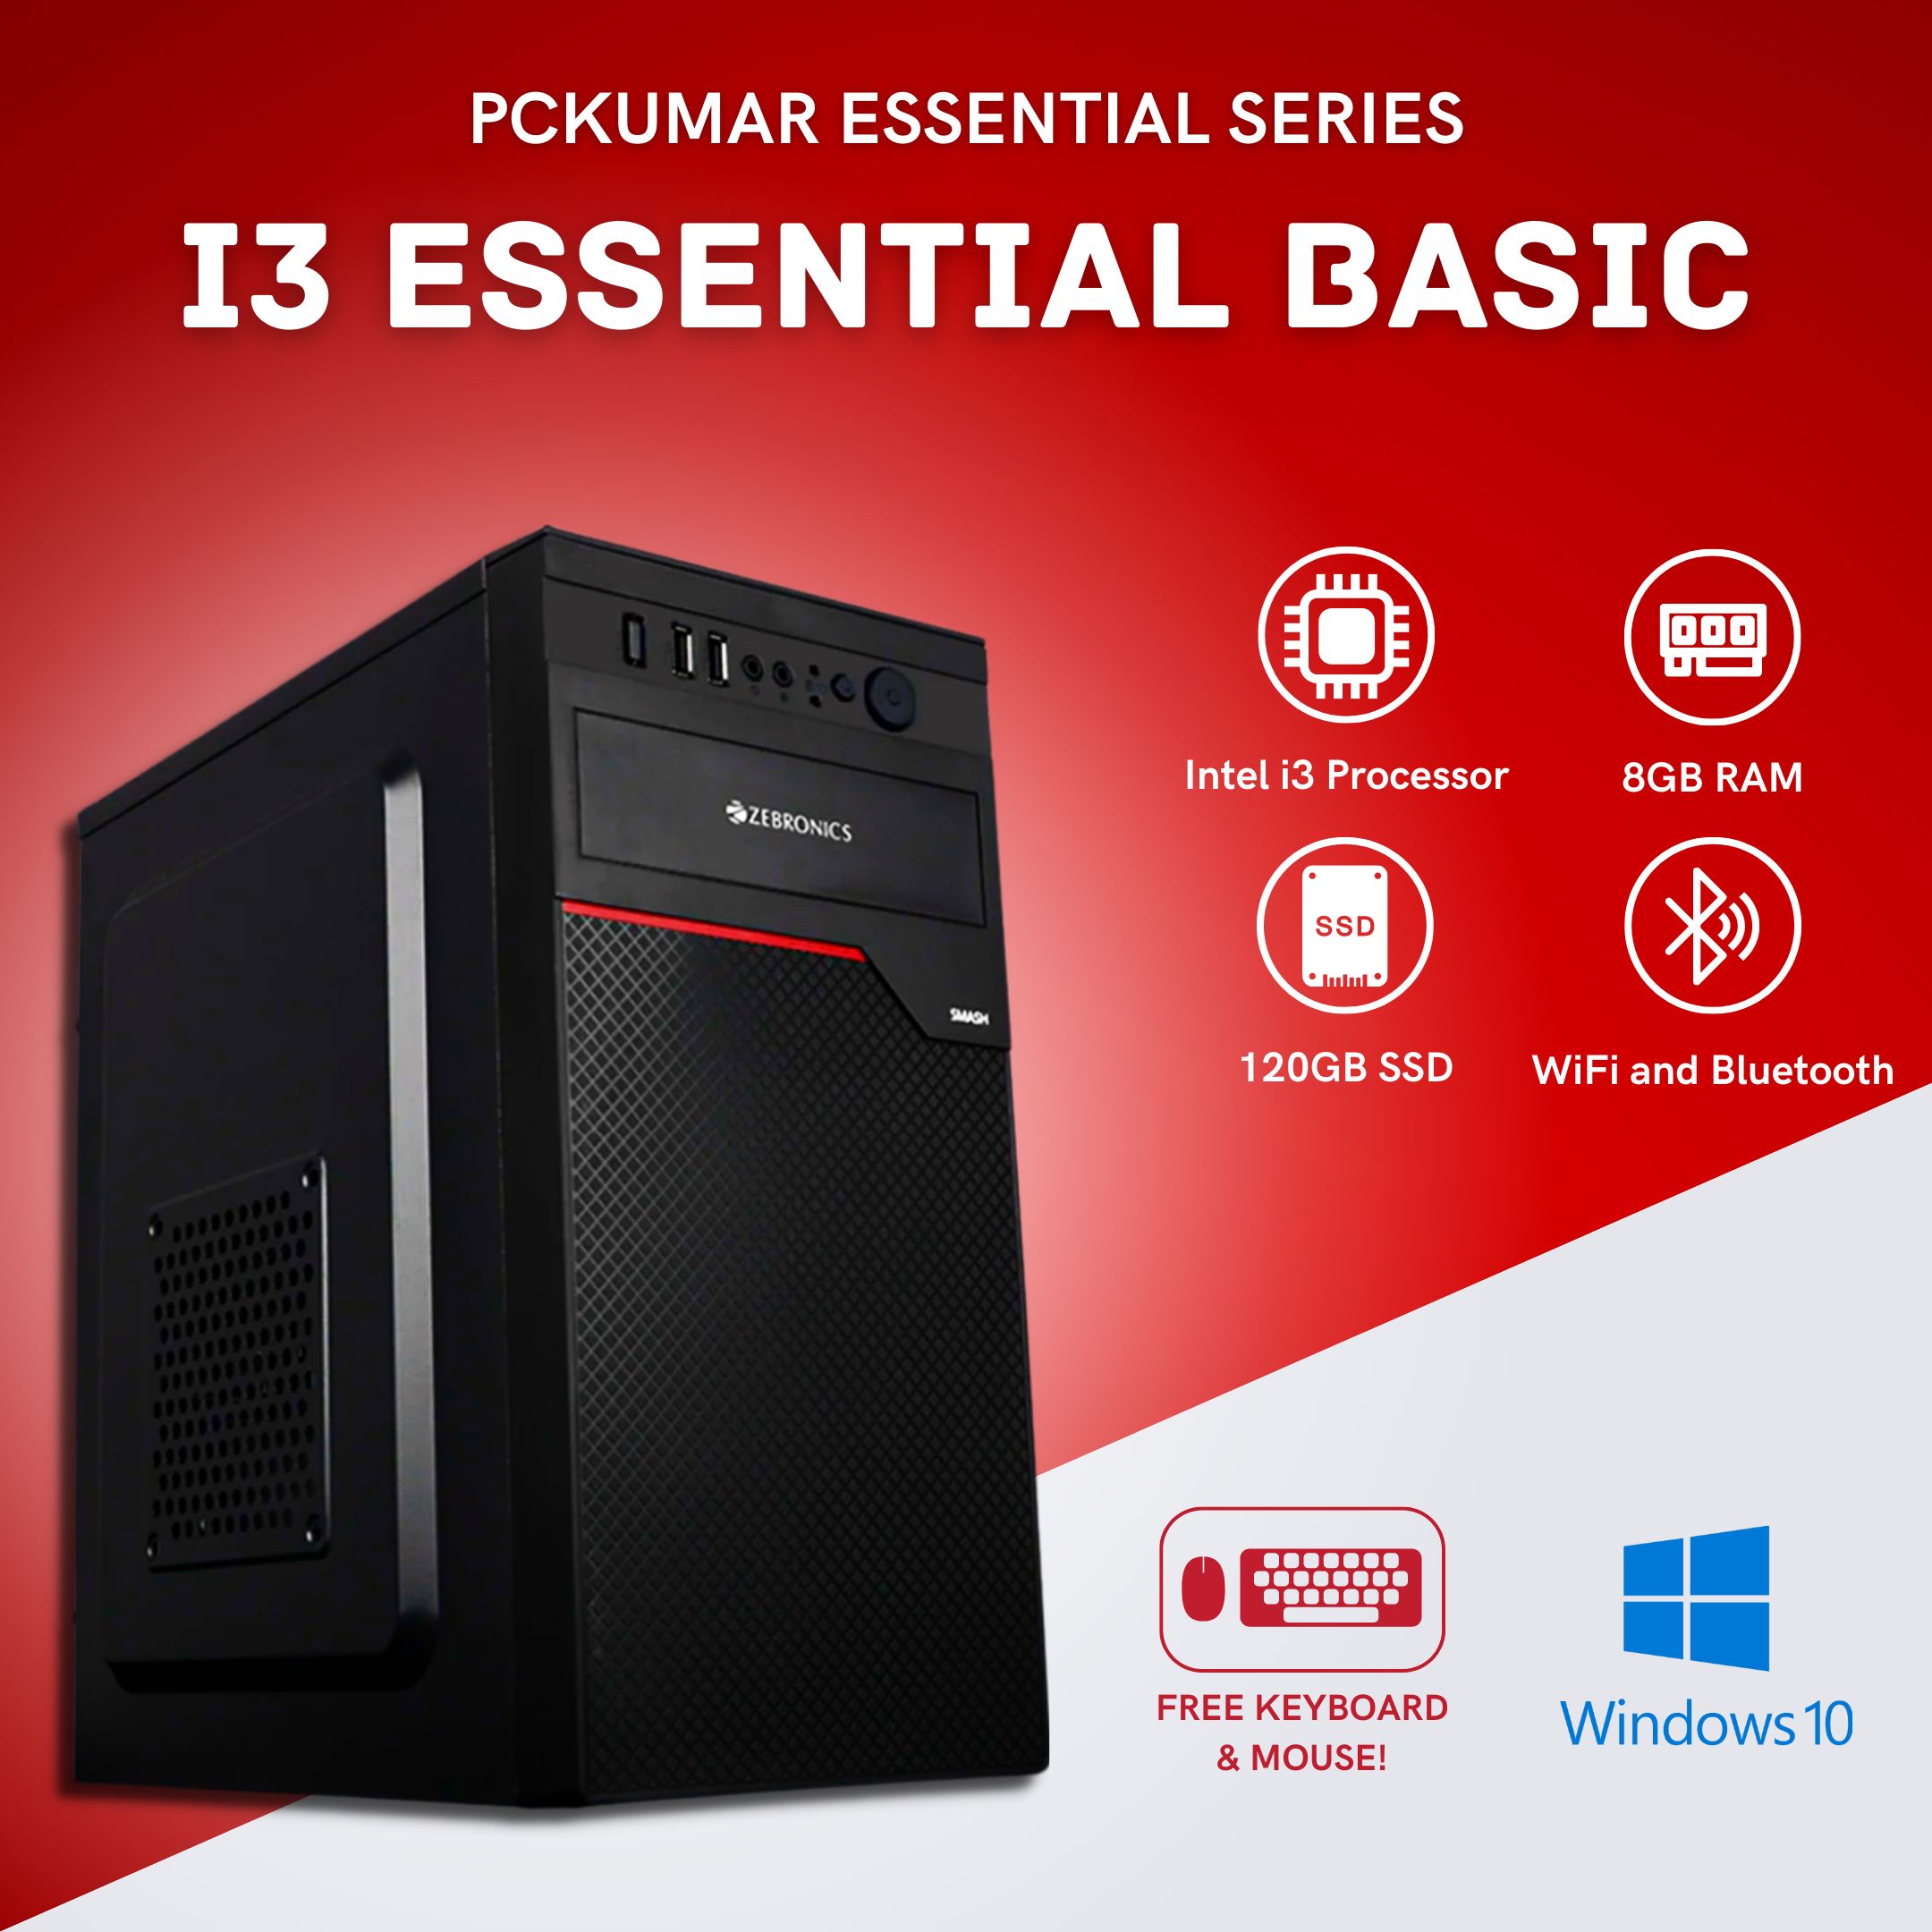 PC Kumar Essential Intel i3 Basic PC